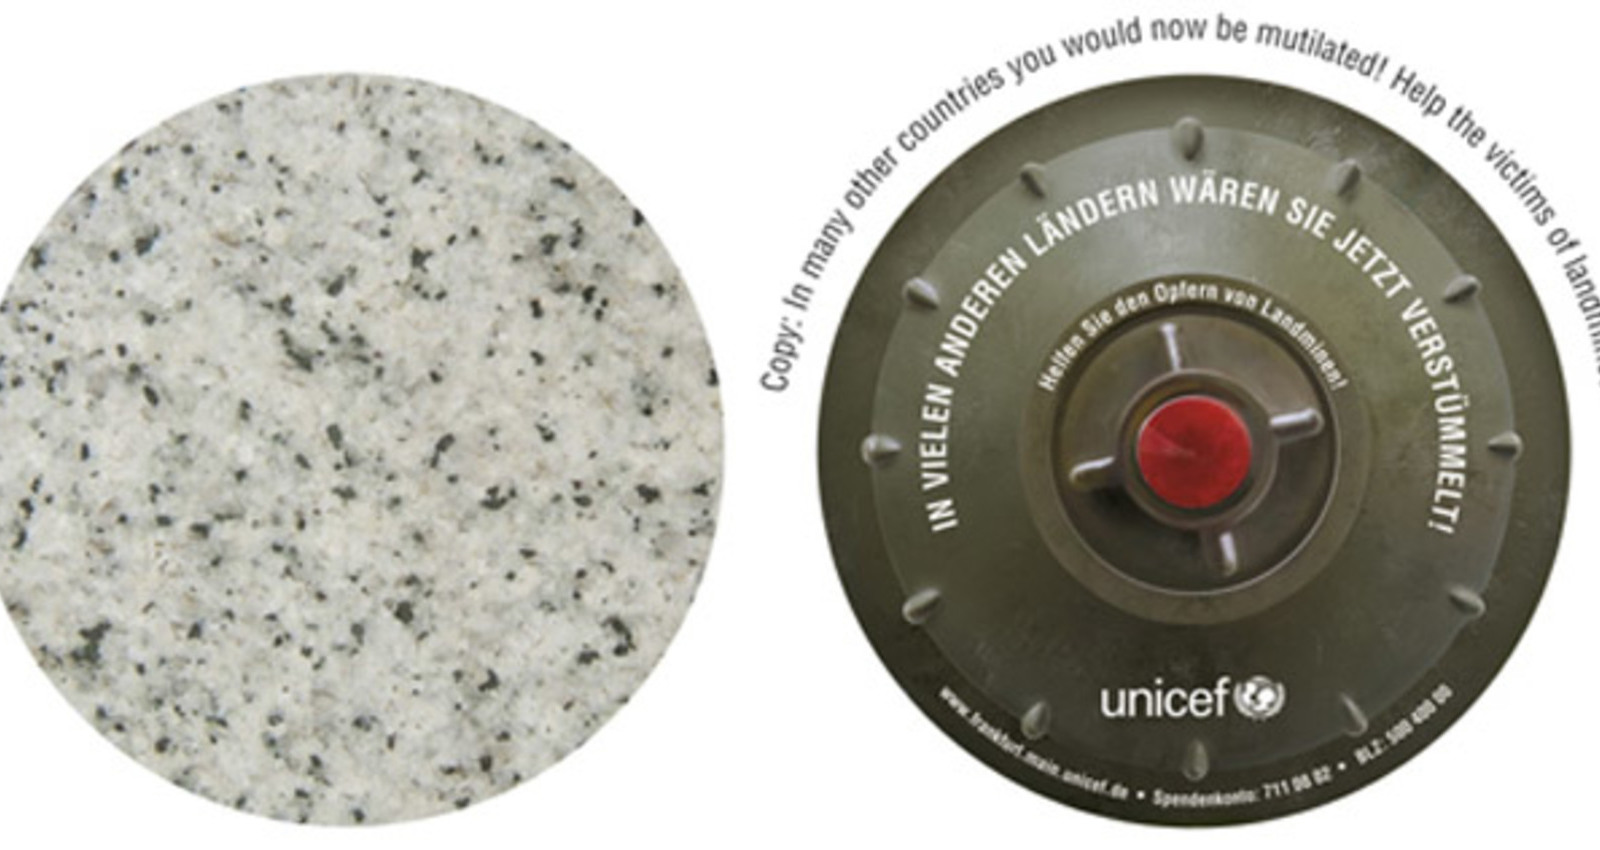 The UNICEF Landmine Stickers